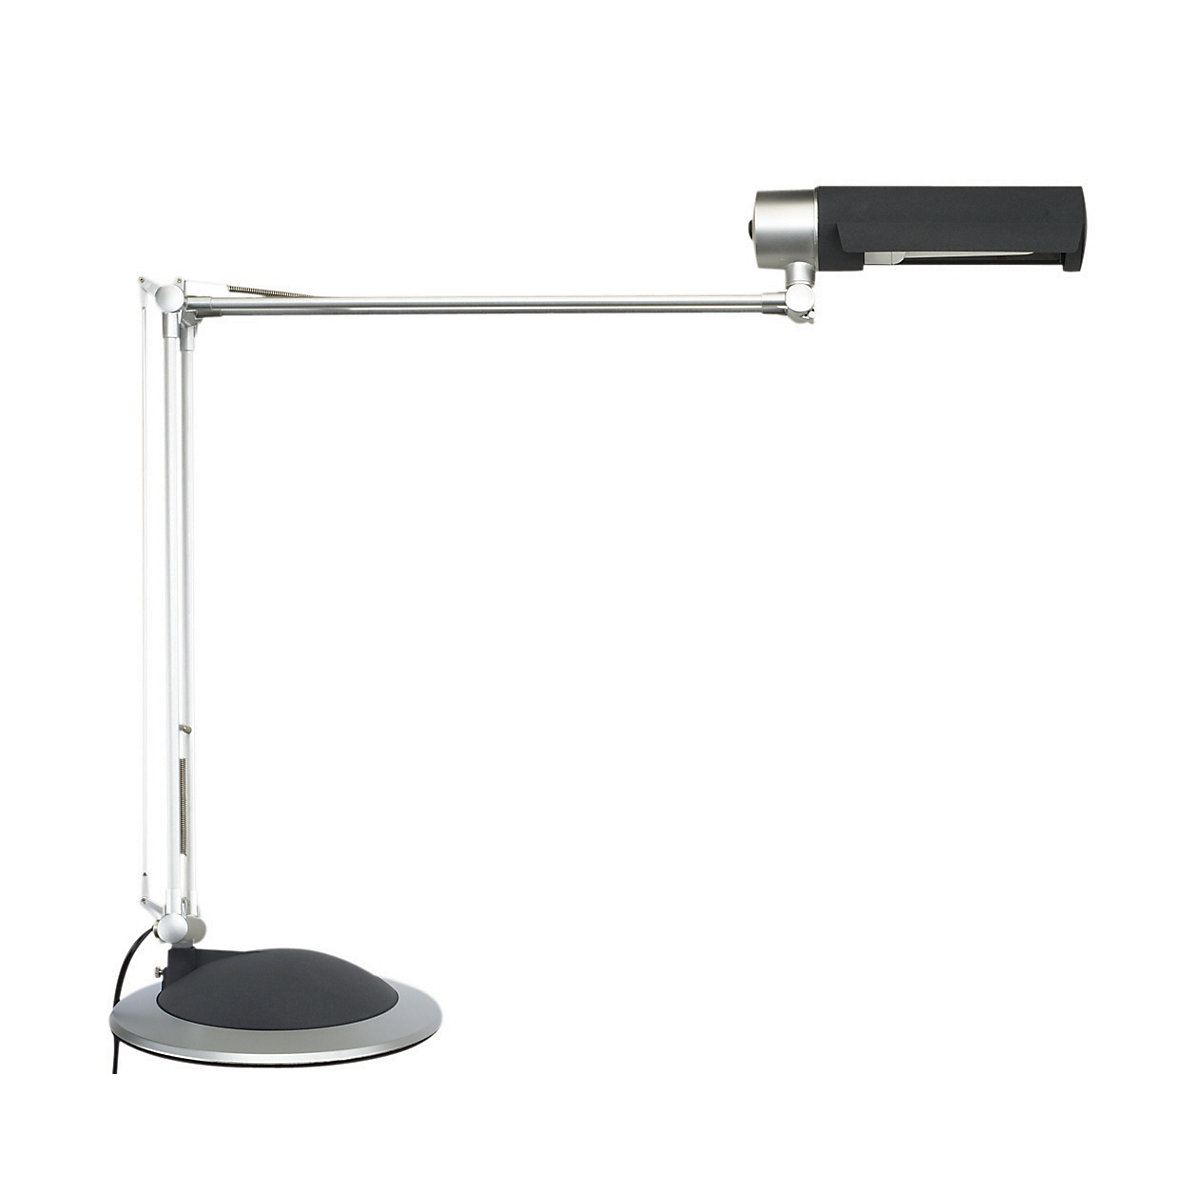 Recreatie ongebruikt Bedenken MAUL – Energy saving lamp: with base stand and clamp base | KAISER+KRAFT